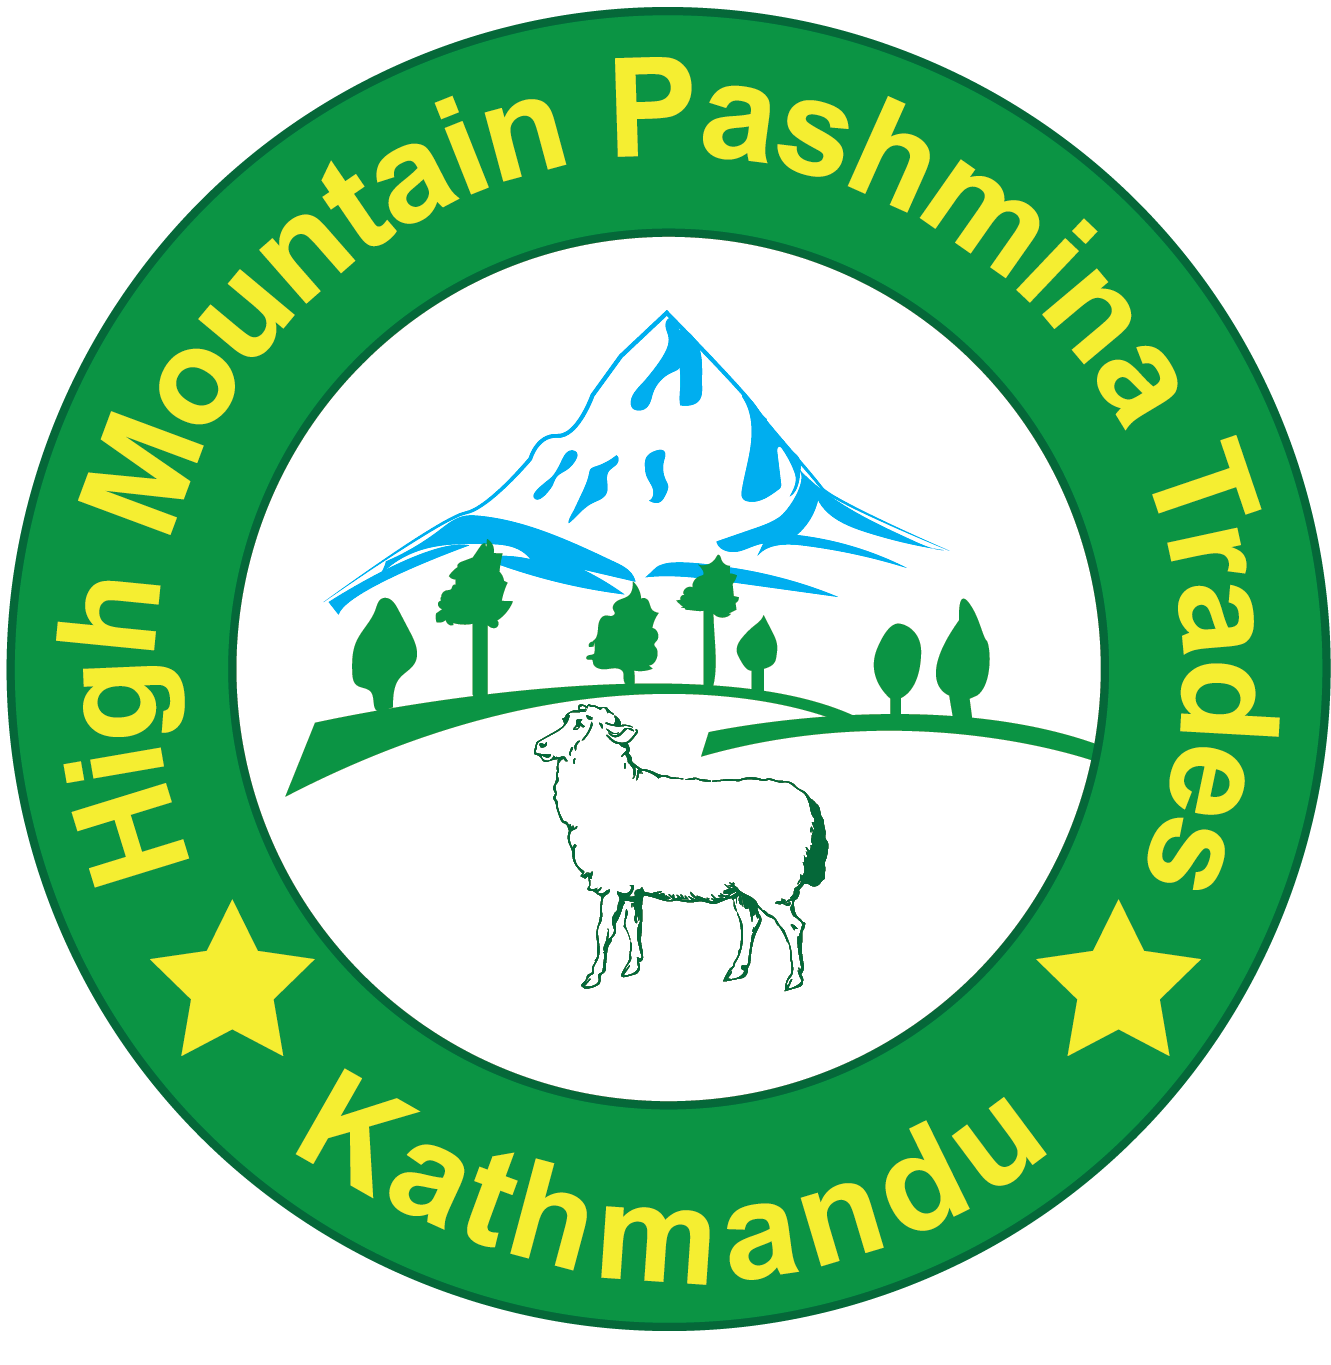 High Mountain Pashmina Traders